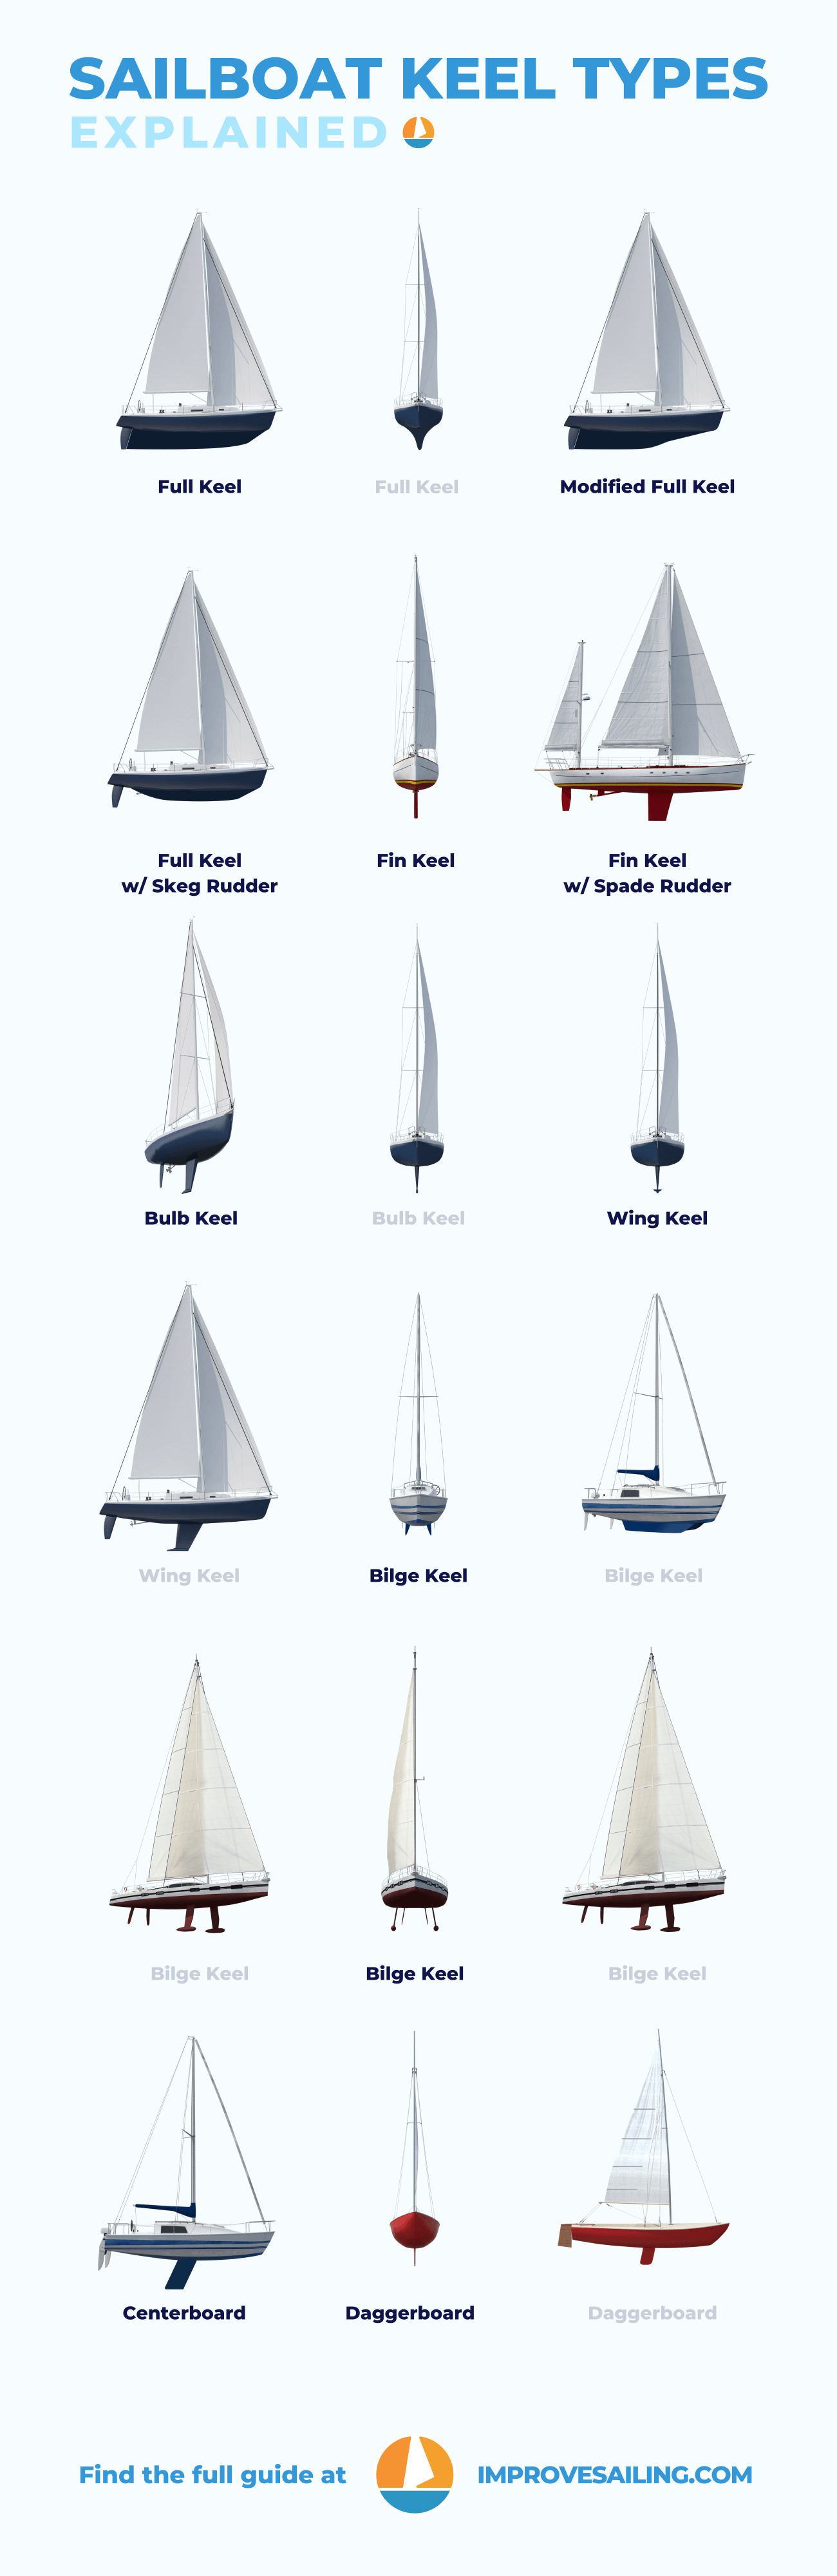 Pinterest image for Sailboat Keel Types: Illustrated Guide (Bilge, Fin, Full)